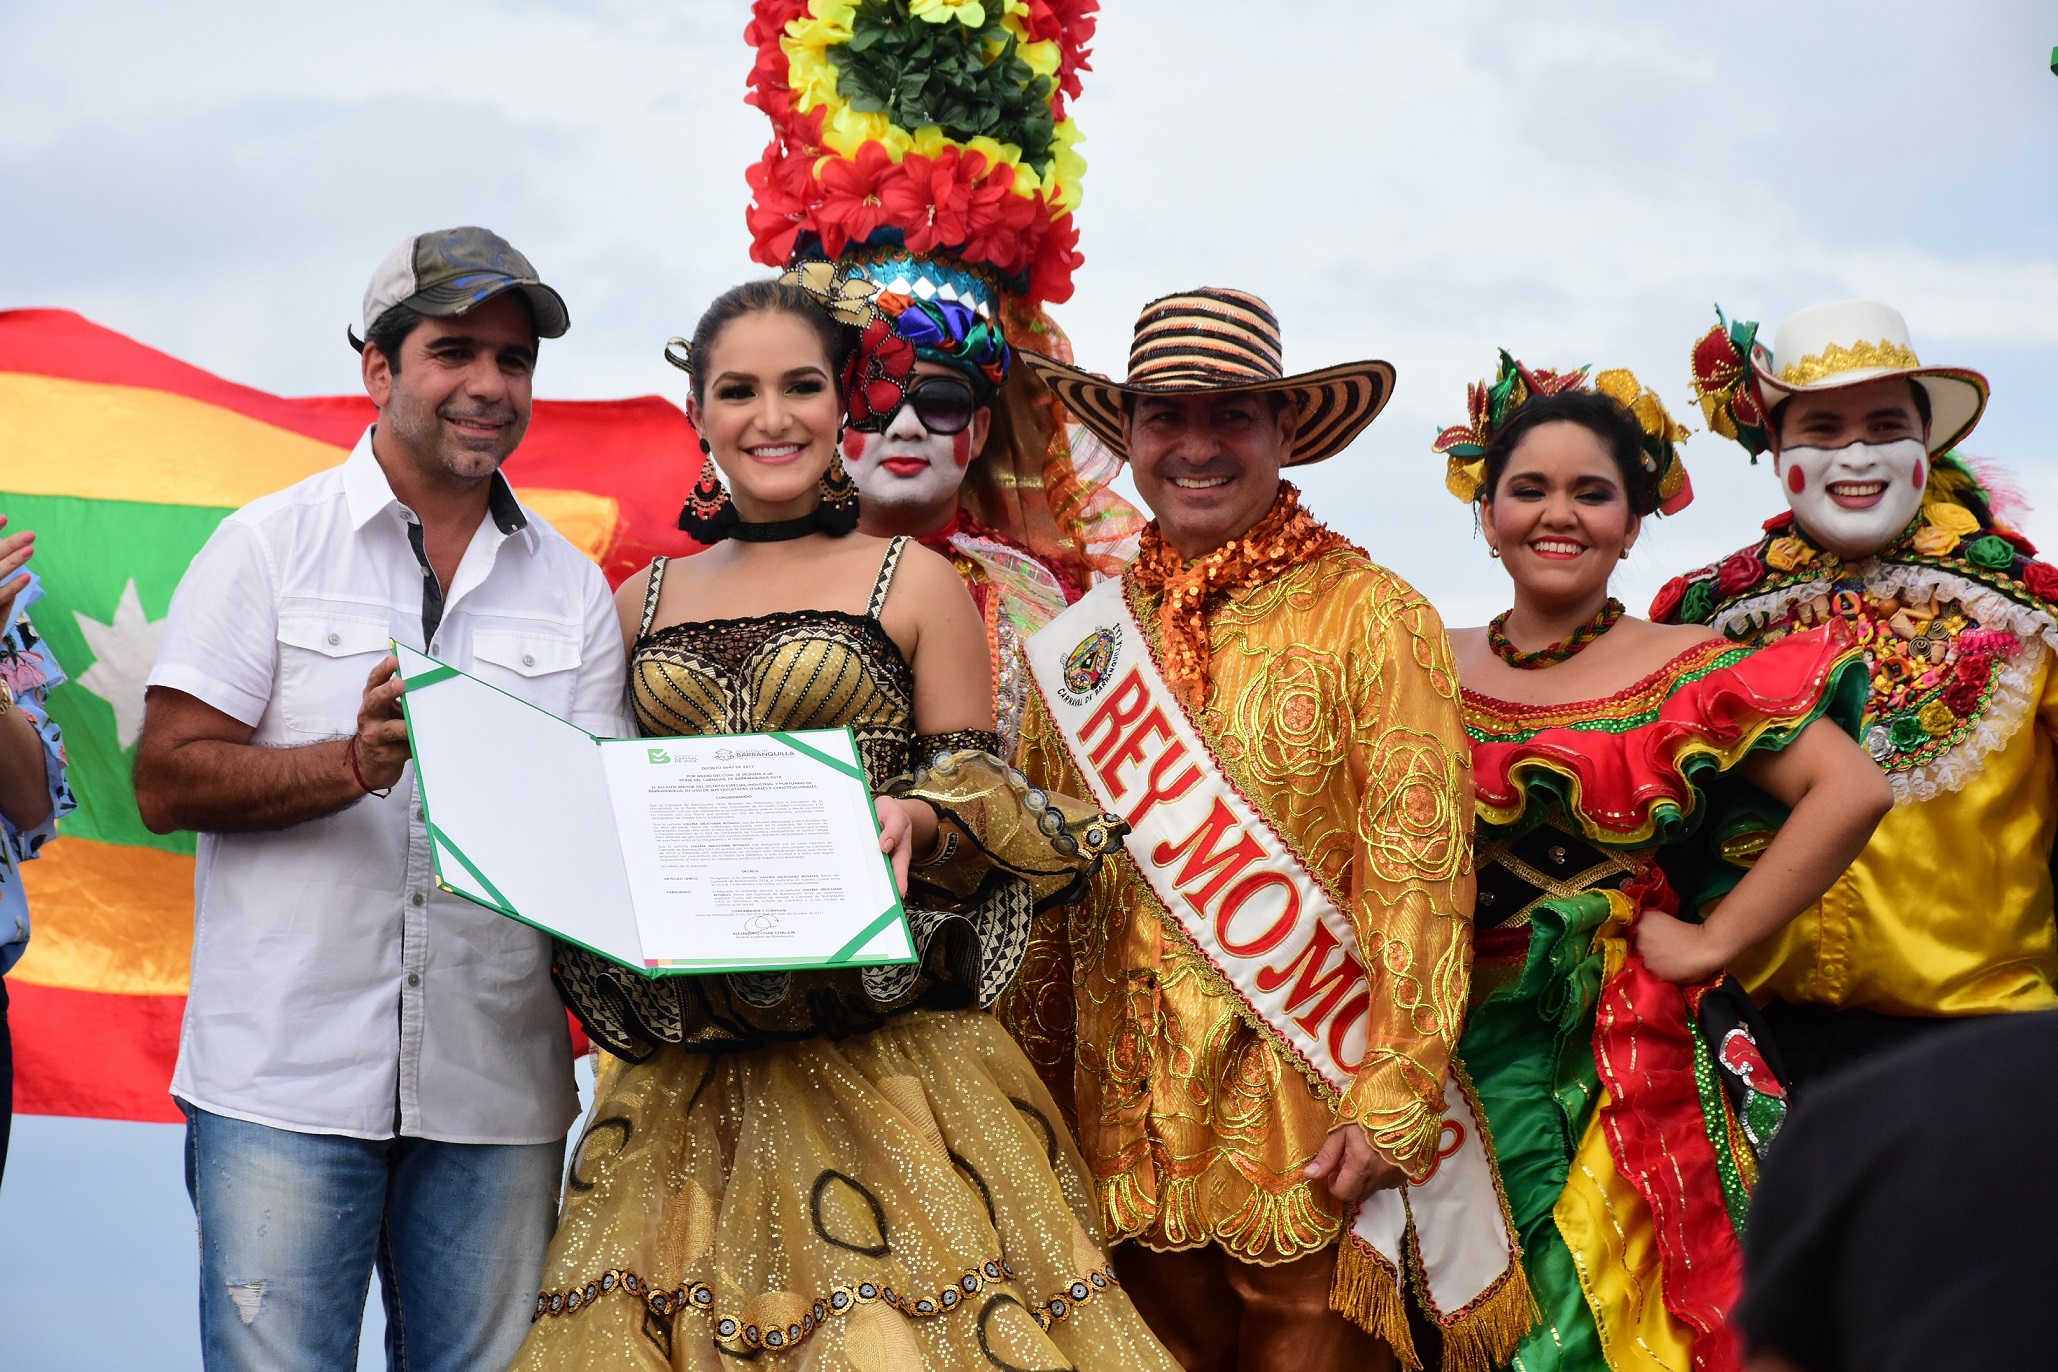 La Reina Valeria ya tiene decreto para presidir el Carnaval 2018